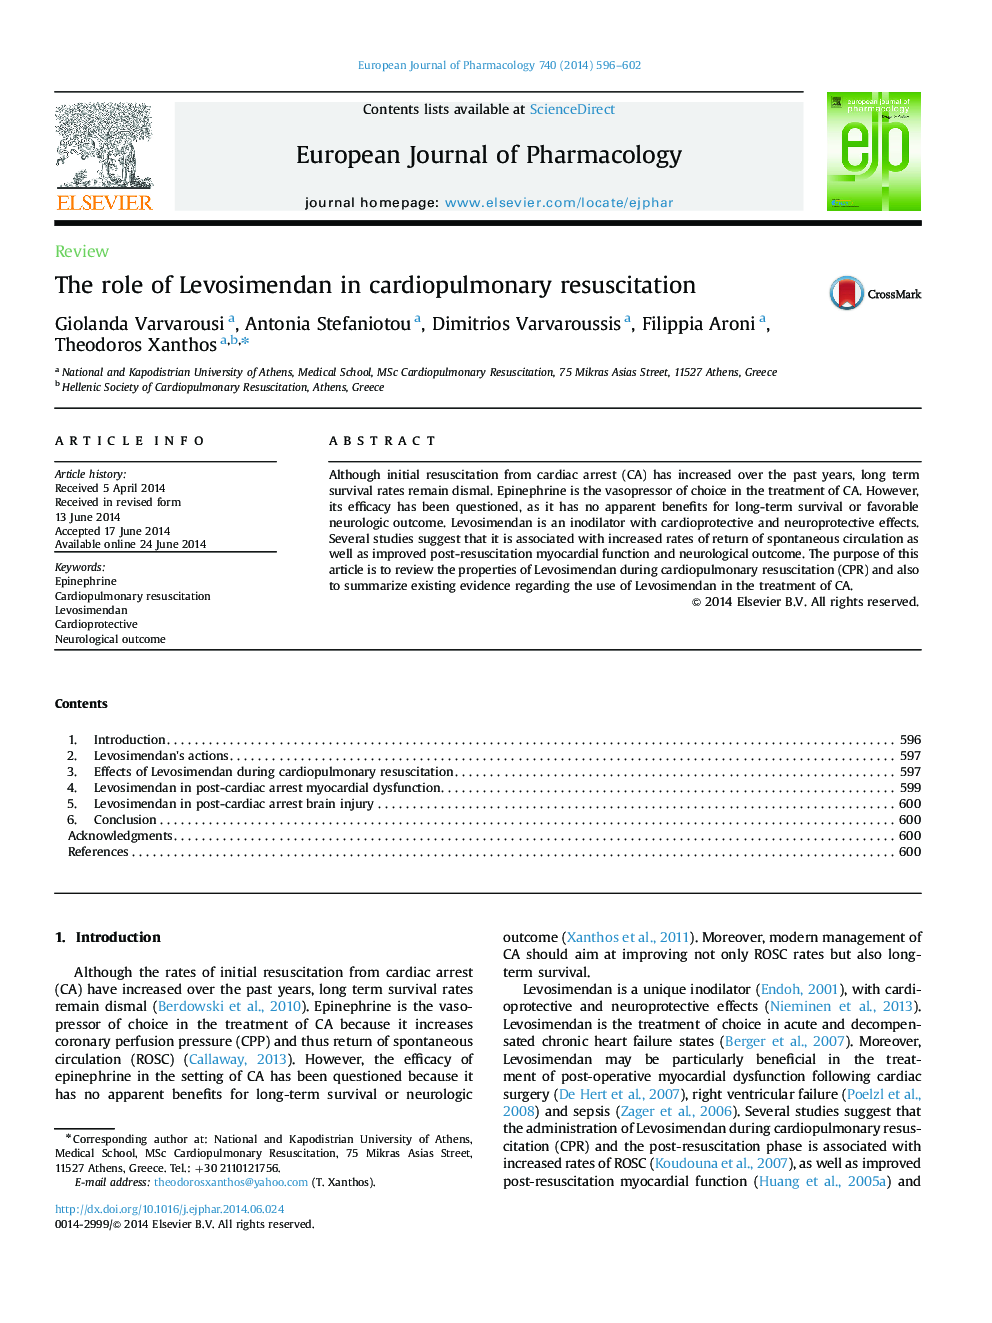 The role of Levosimendan in cardiopulmonary resuscitation